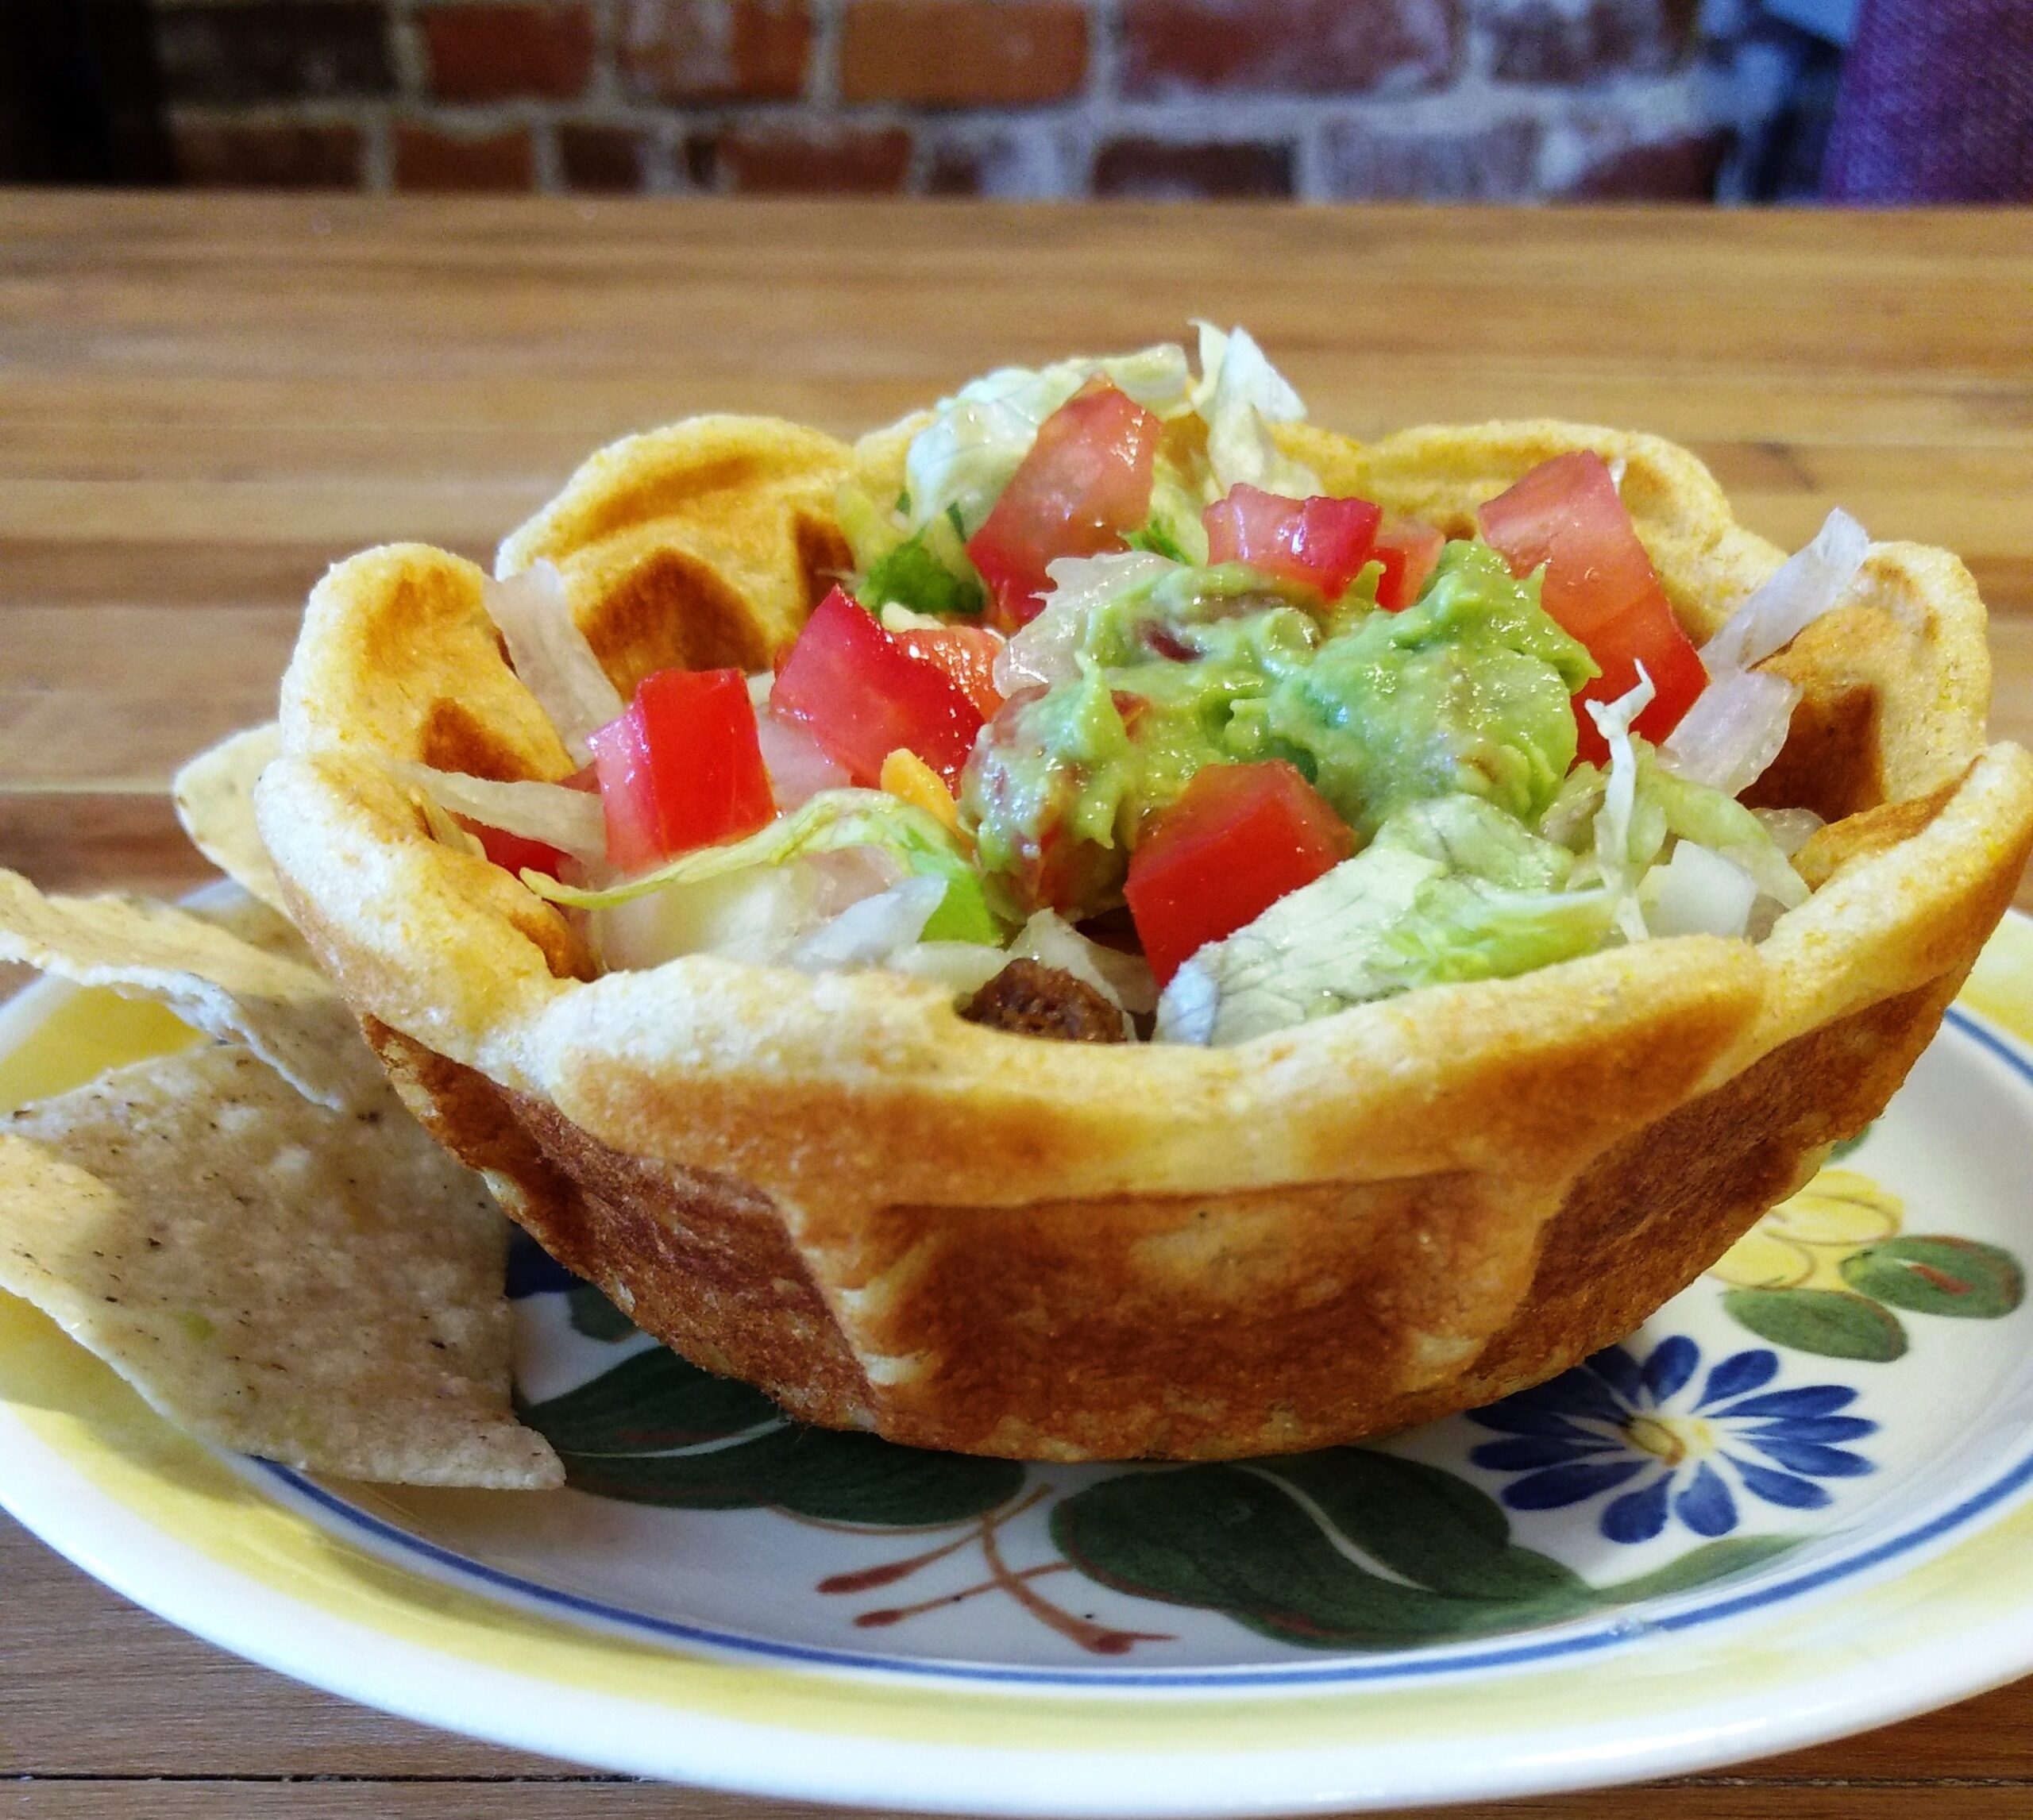 🌮 Taco Tuesday 🌮How to Make Taco Waffle Bowls 🌮 DASH Waffle Bowl Maker  🌮 My Gadget Kitchen (133) 